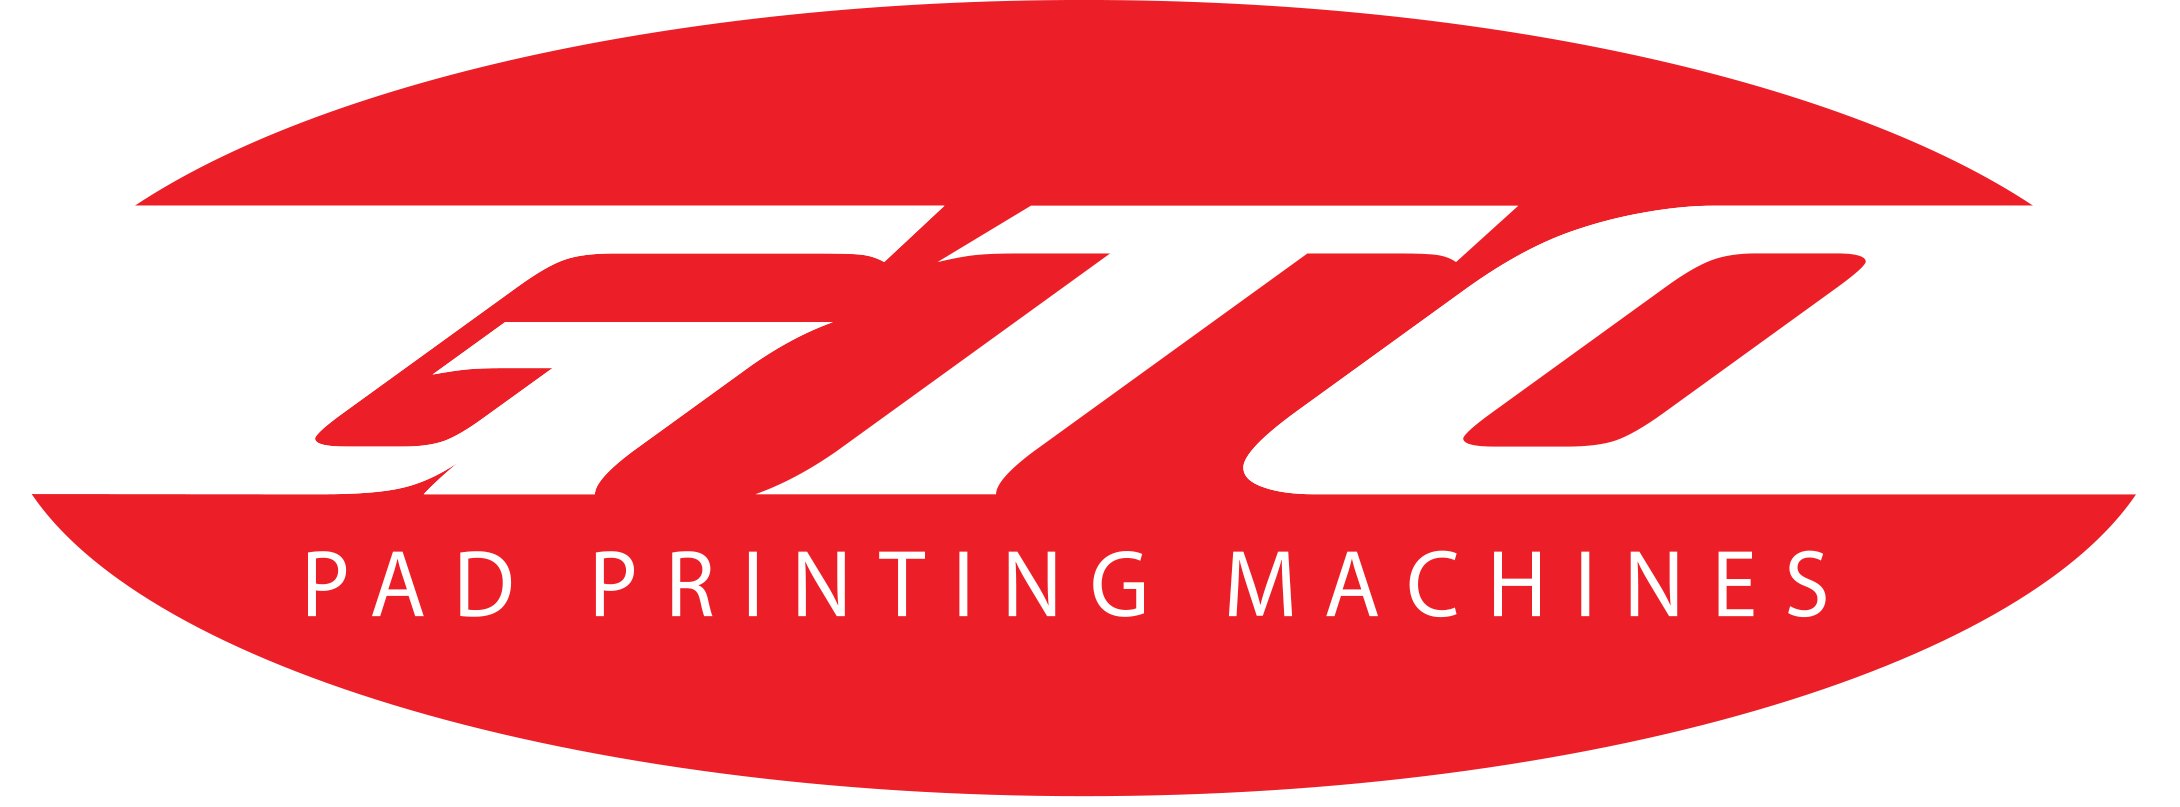 GTO Printing Machines - gtogts